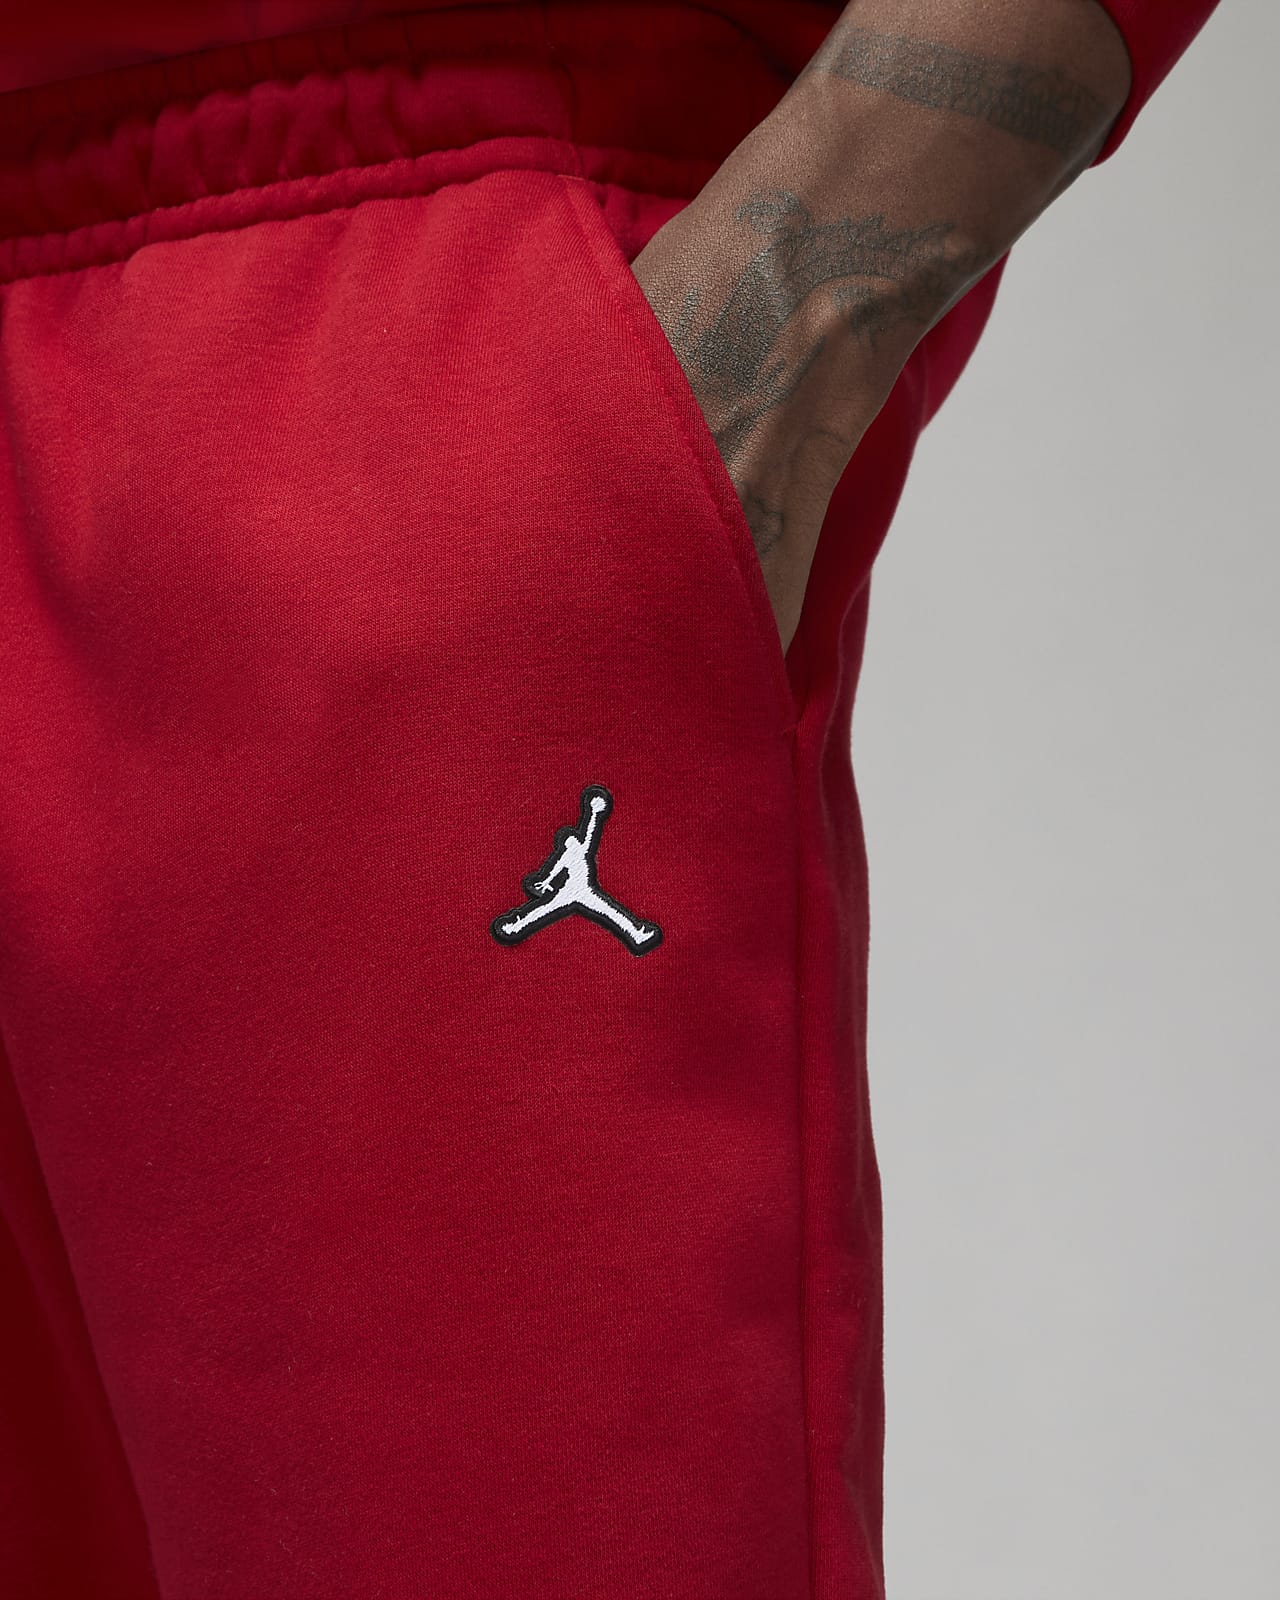 Jordan Wordmark Men's Fleece Trousers. Nike LU